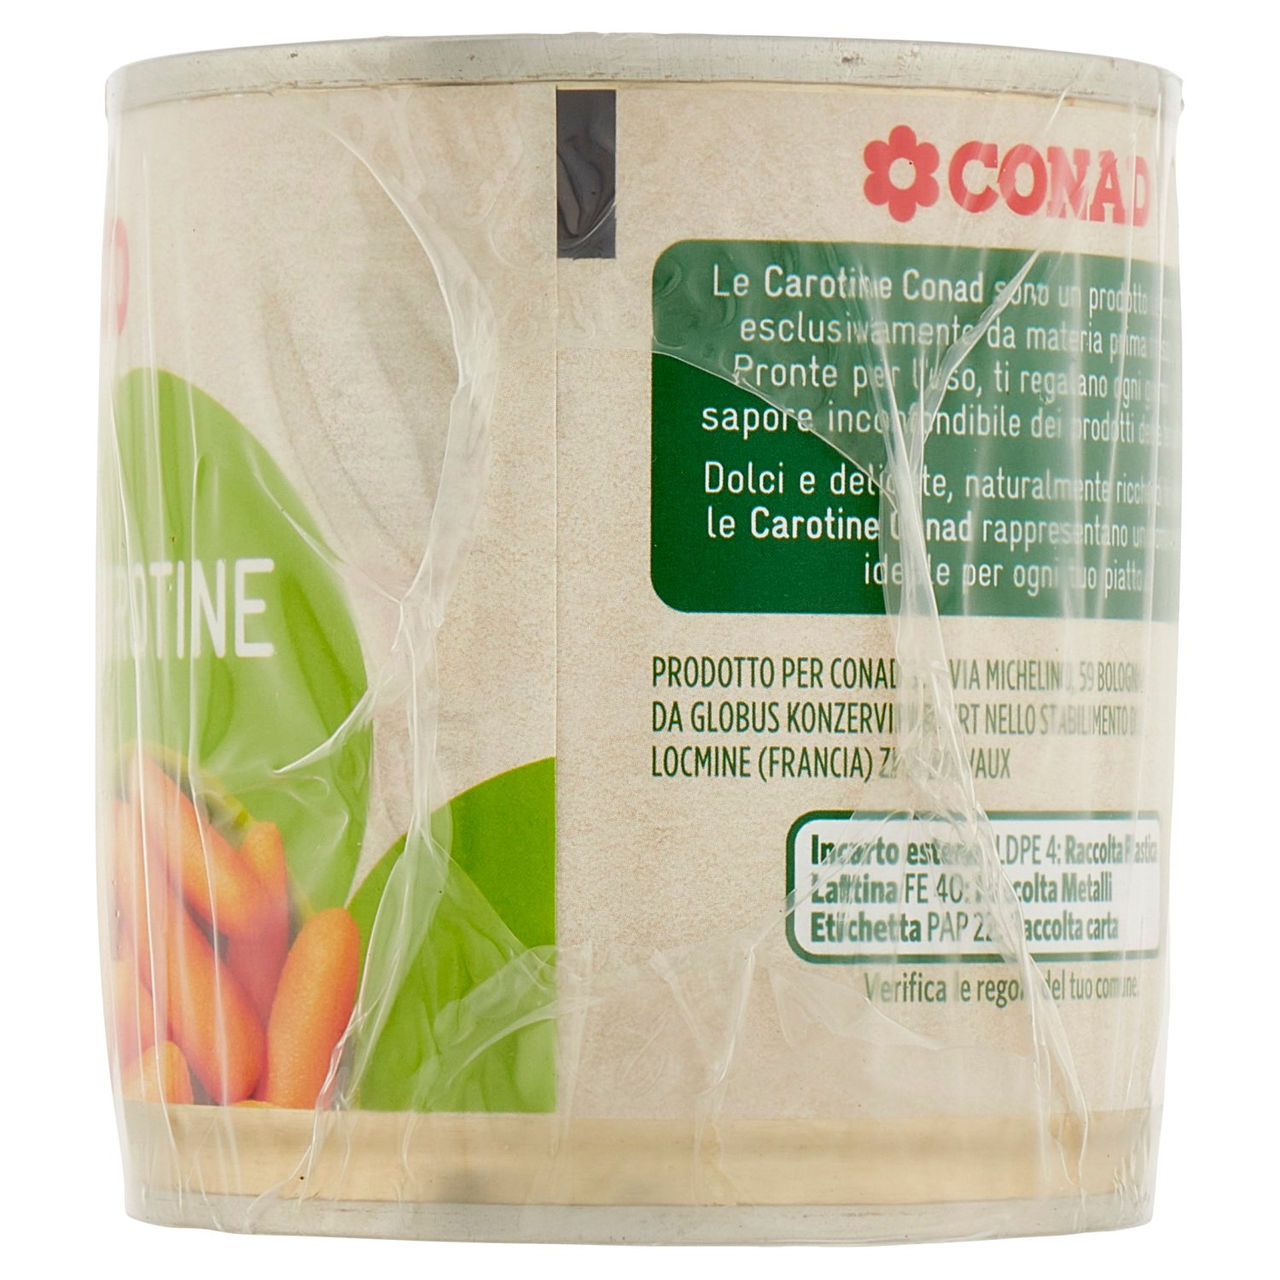 Carotine 3 x 200 g Conad in vendita online